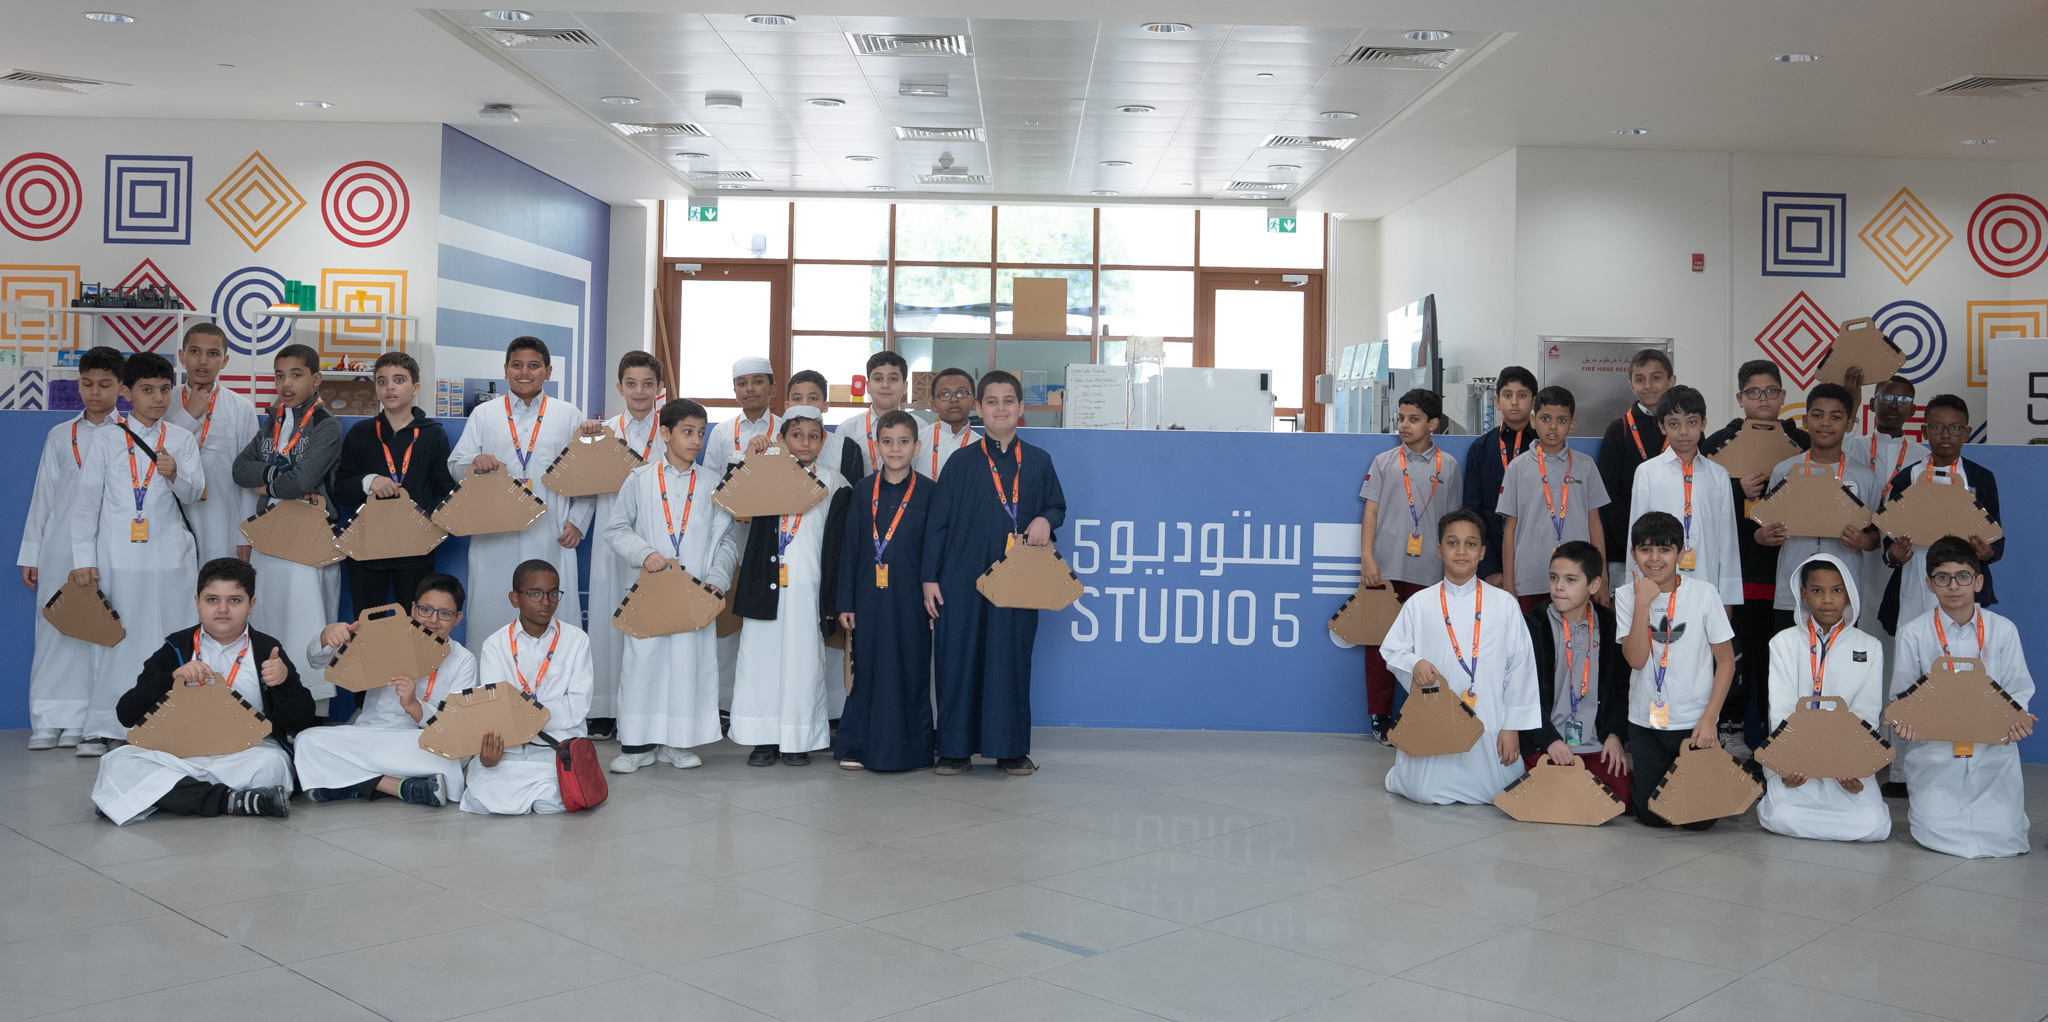  Studio 5 Illustrates a Distinctive Digital Presence at Expo 2023 Doha